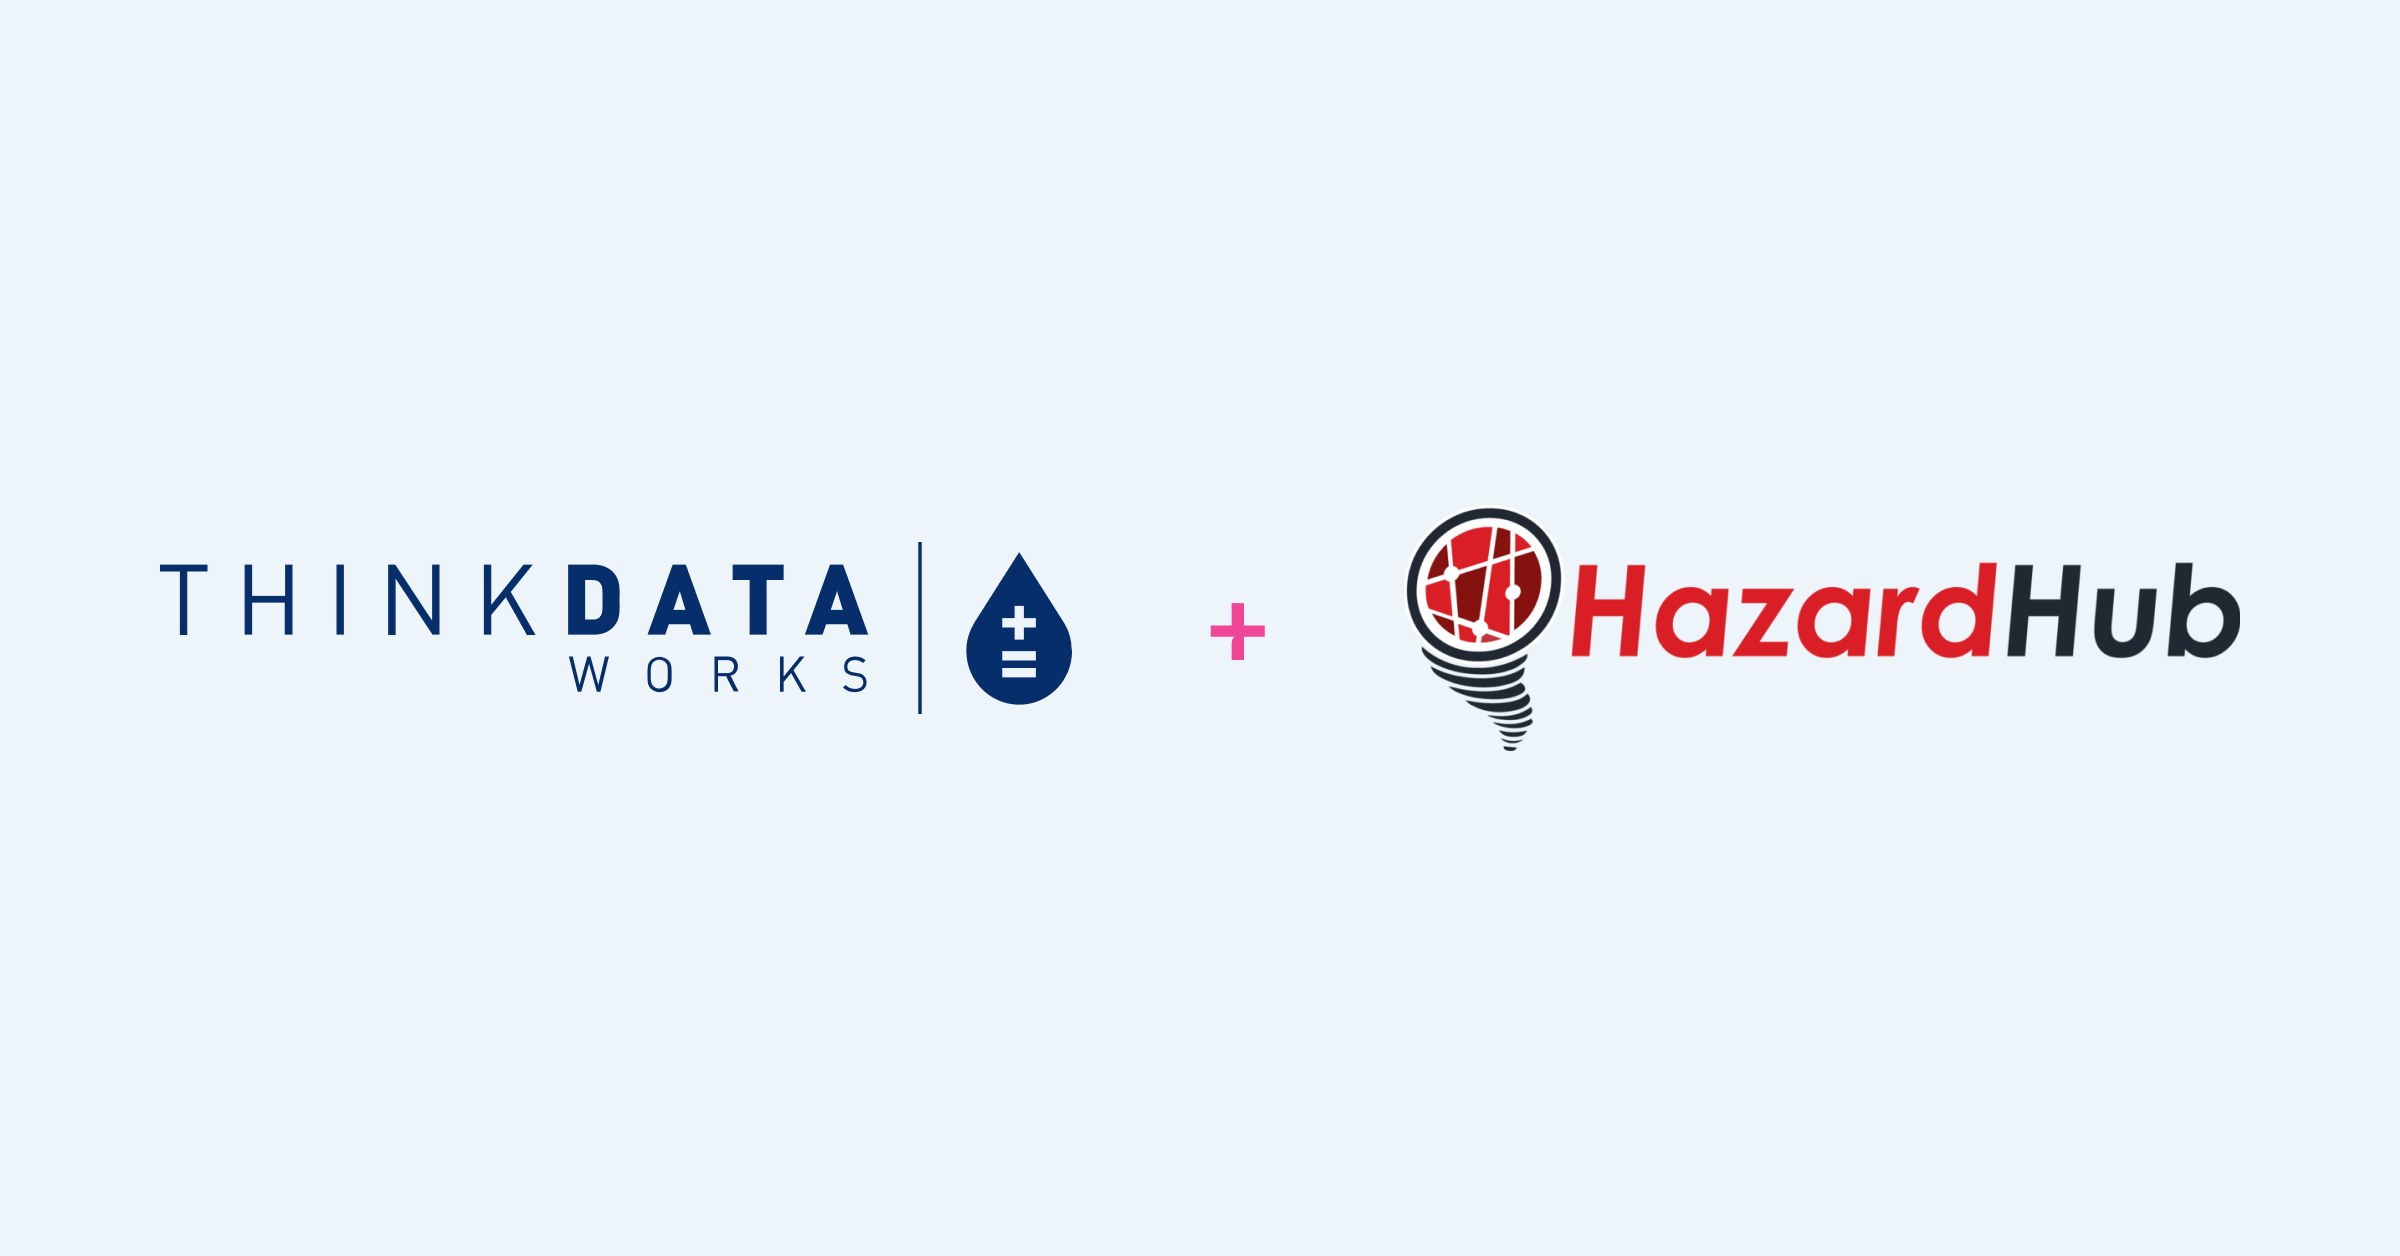 ThinkData Works partners with HazardHub